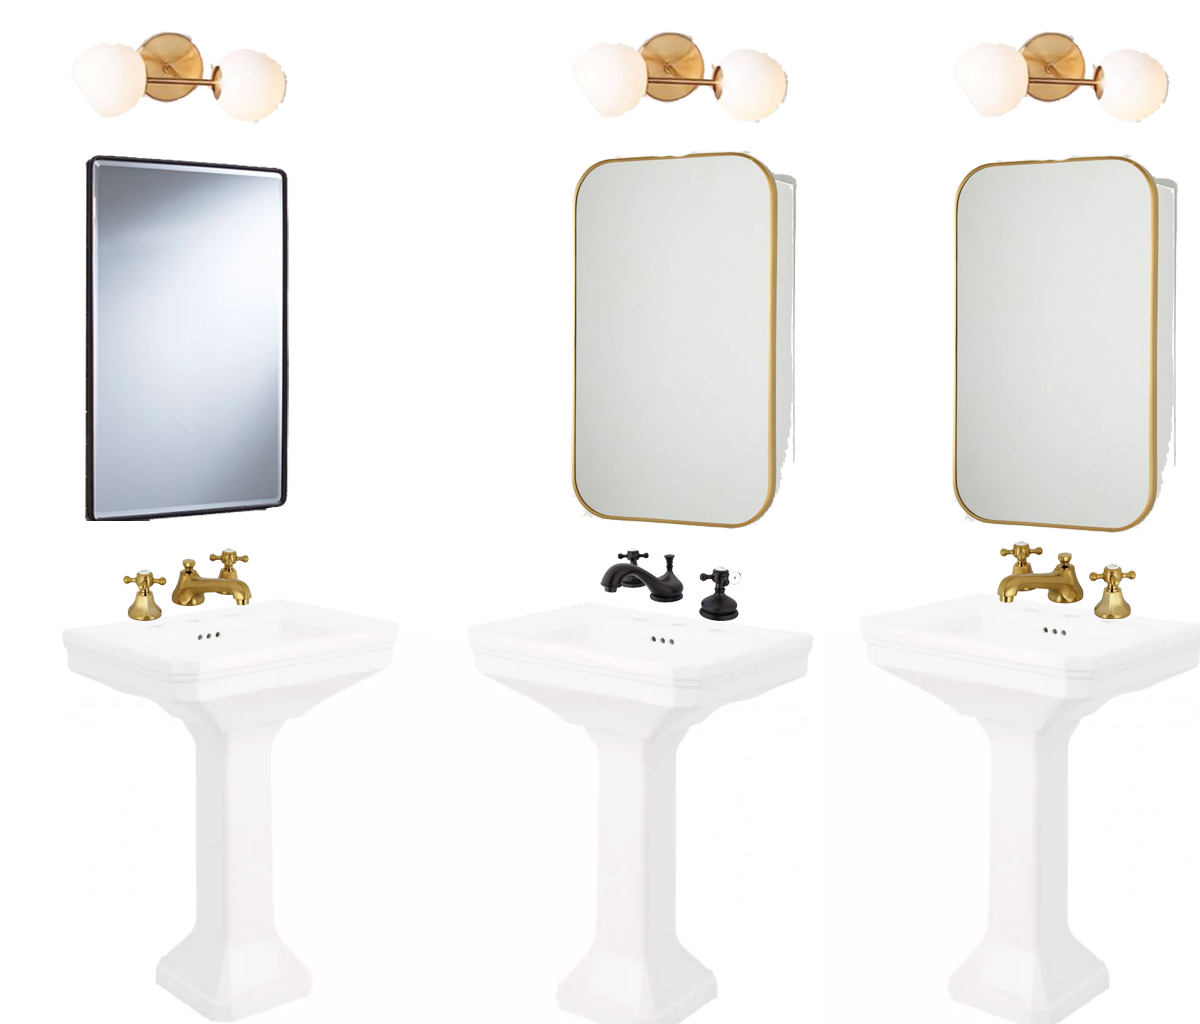 Vanity Mirror Sconce Collage bathroom inspiration Bathroom Renovation - My Vision for the Space and Sconces #bathroom #bathroominspiration #moodboard #design #home #interiorinspiration #decor #bathroominspo #remodel #bathroomremodel #simoneathome